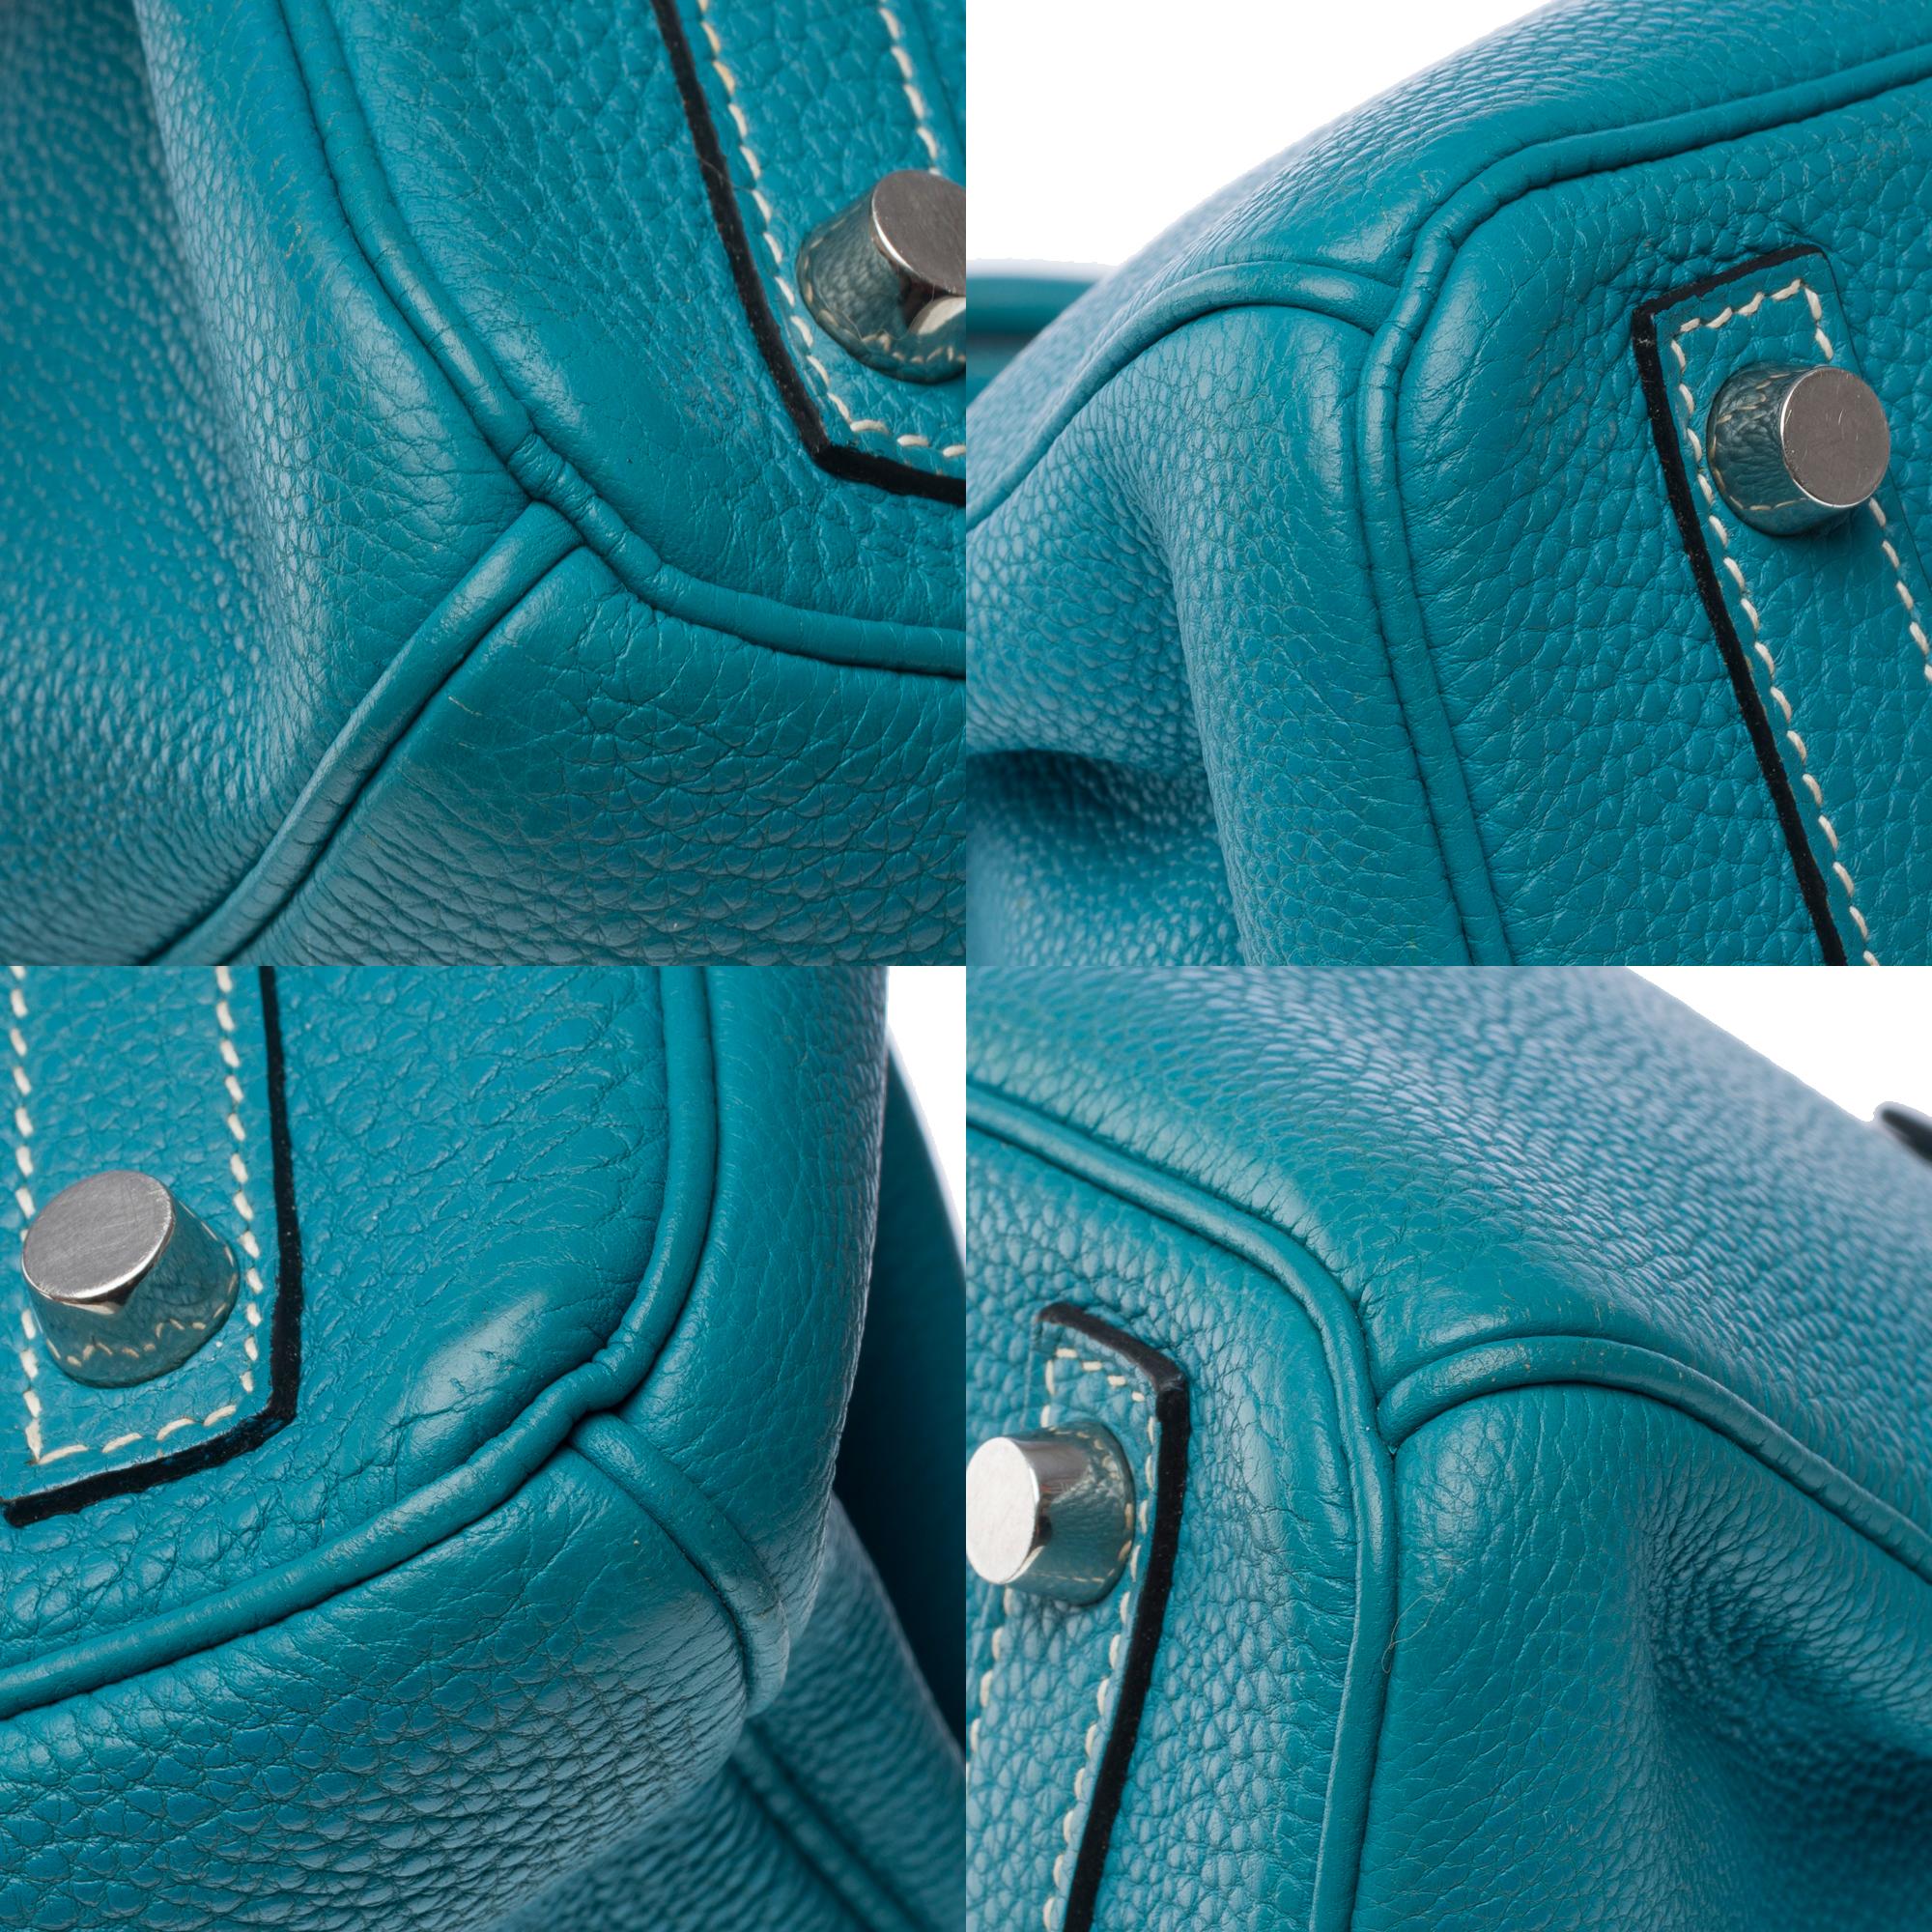 Splendid Hermes Birkin 30 handbag in Blue Jean Togo leather, SHW For Sale 8